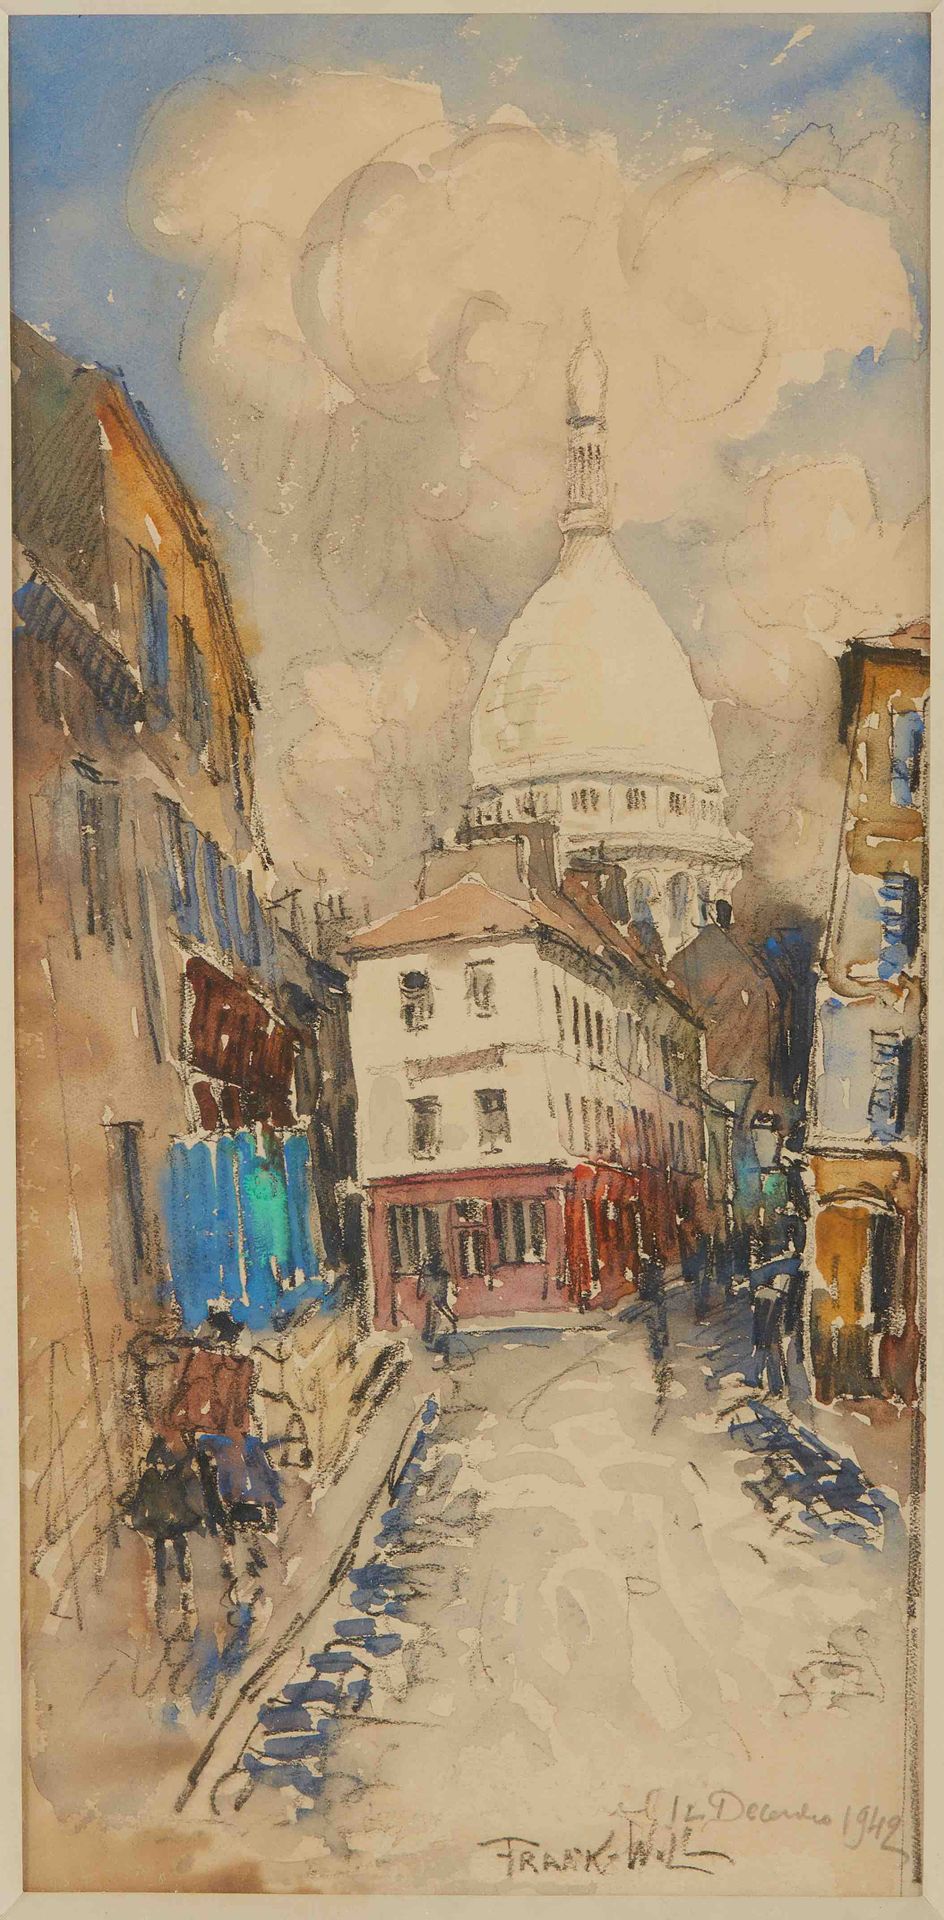 Null FRANK-WILL (1900-1951)

Montmartre

Aquarell auf Papier, unten rechts signi&hellip;